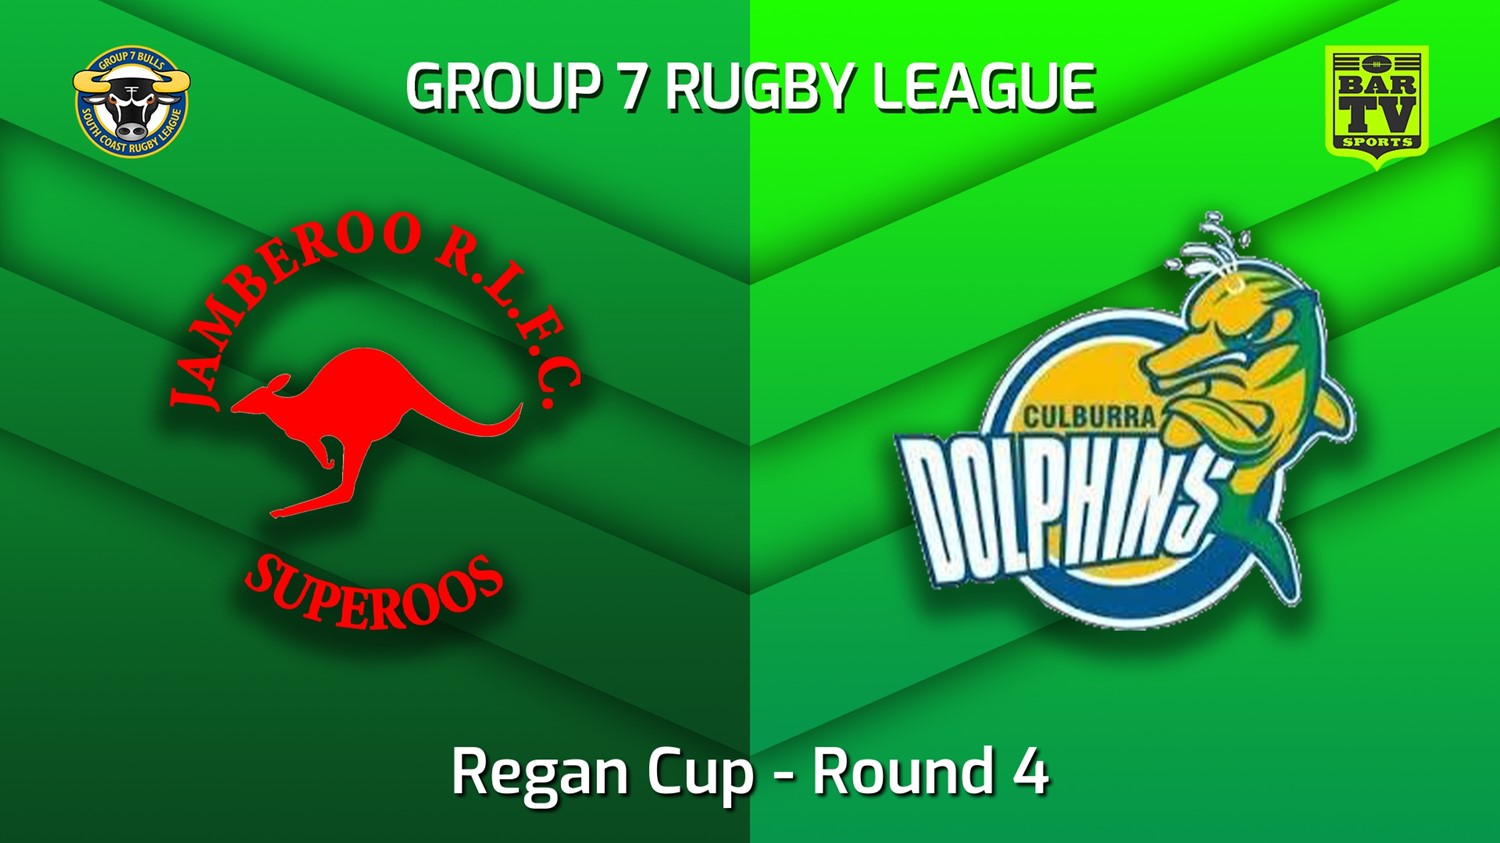 220507-South Coast Round 4 - Regan Cup - Jamberoo v Culburra Dolphins Slate Image